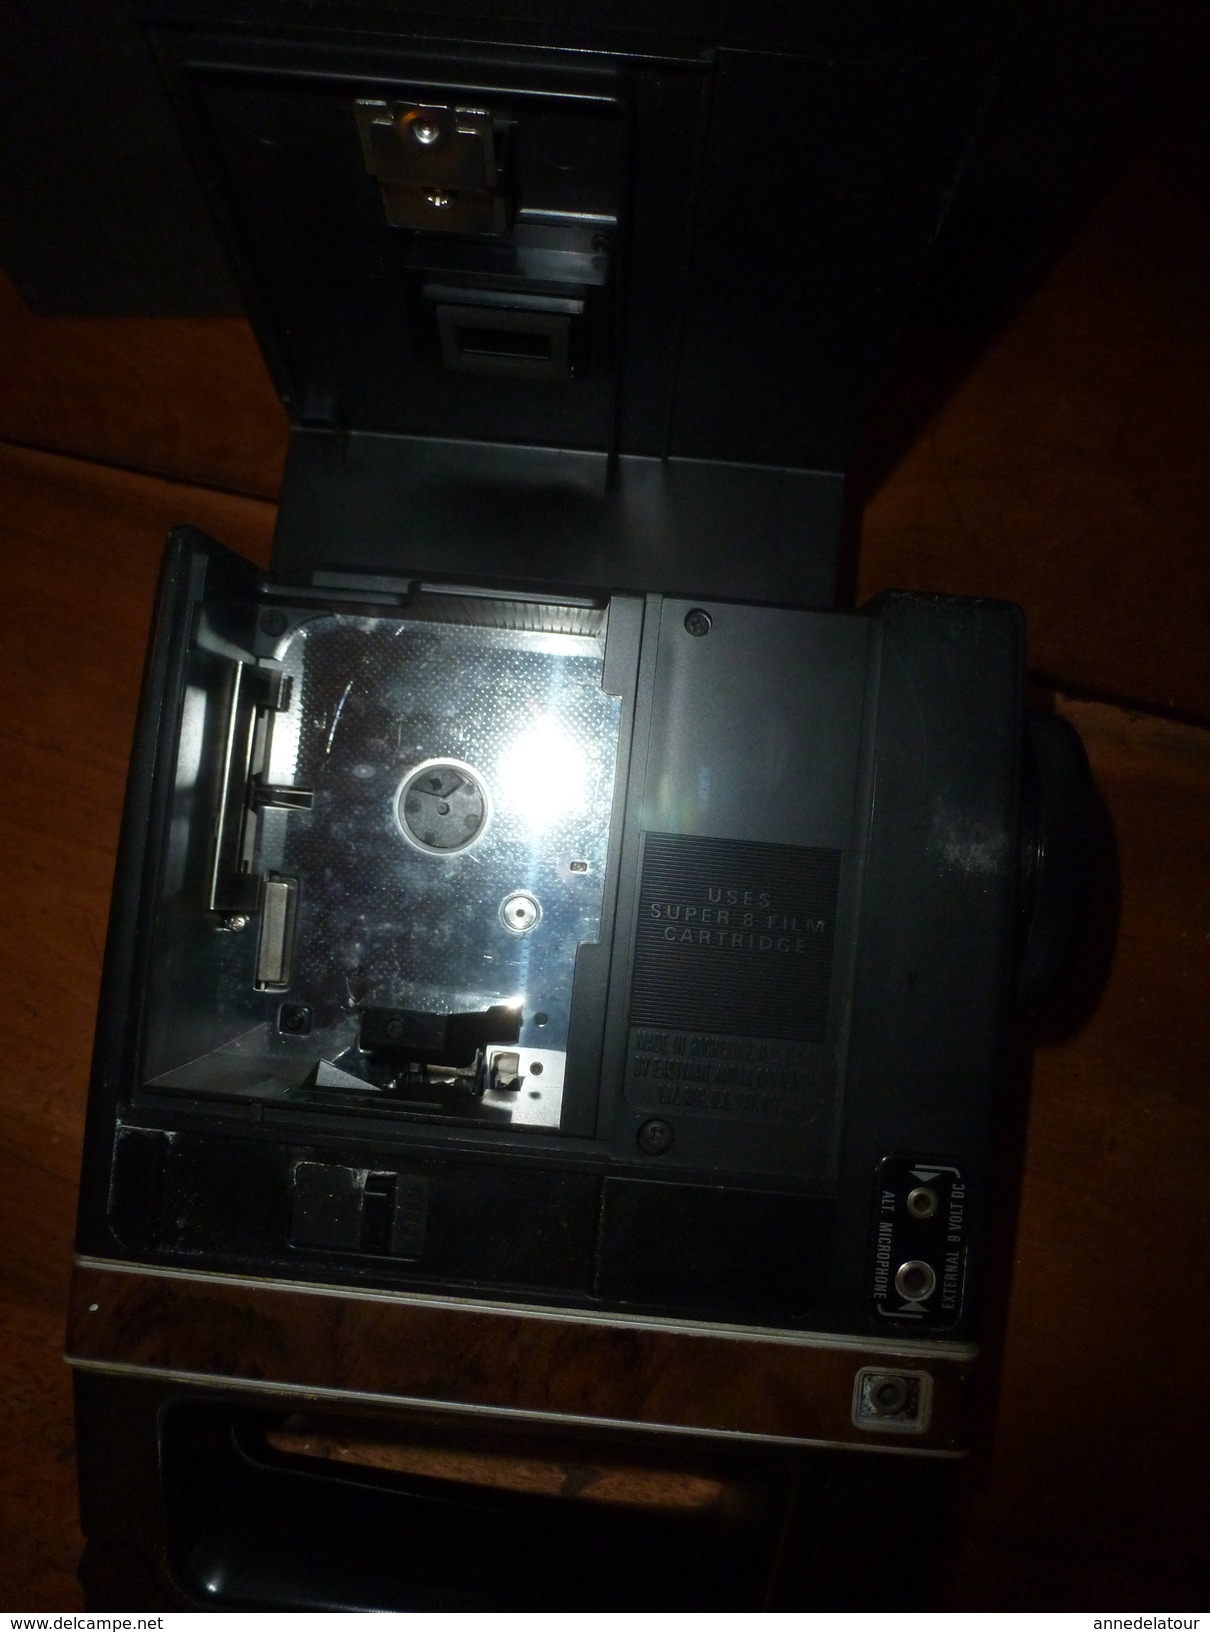 KODAK EKTASOUND 130 movie caméra :  avec notice et boite d'origine  (année de fabrication probable, vers 1973)